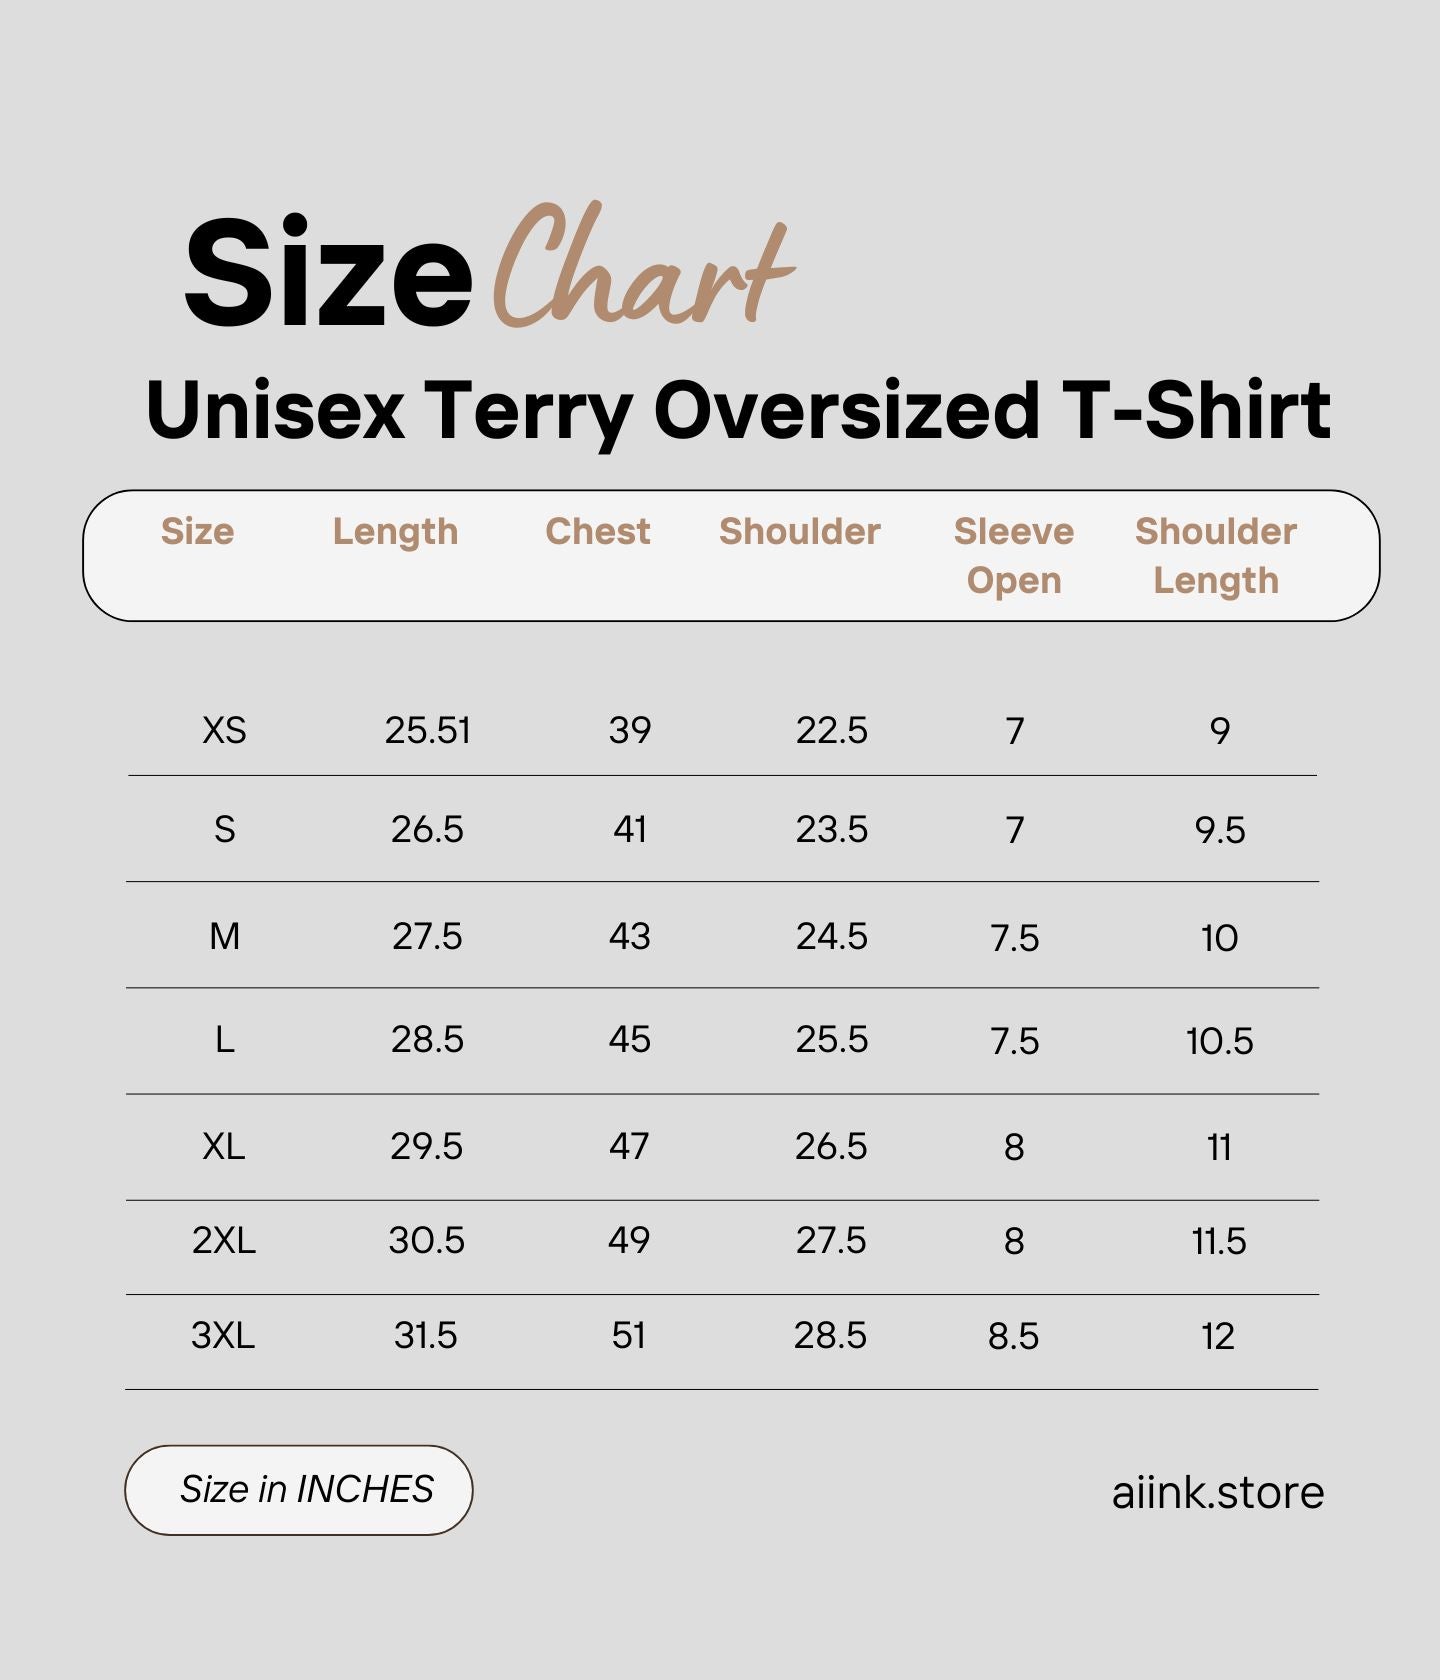 unisex-terry-oversized-t-shirt